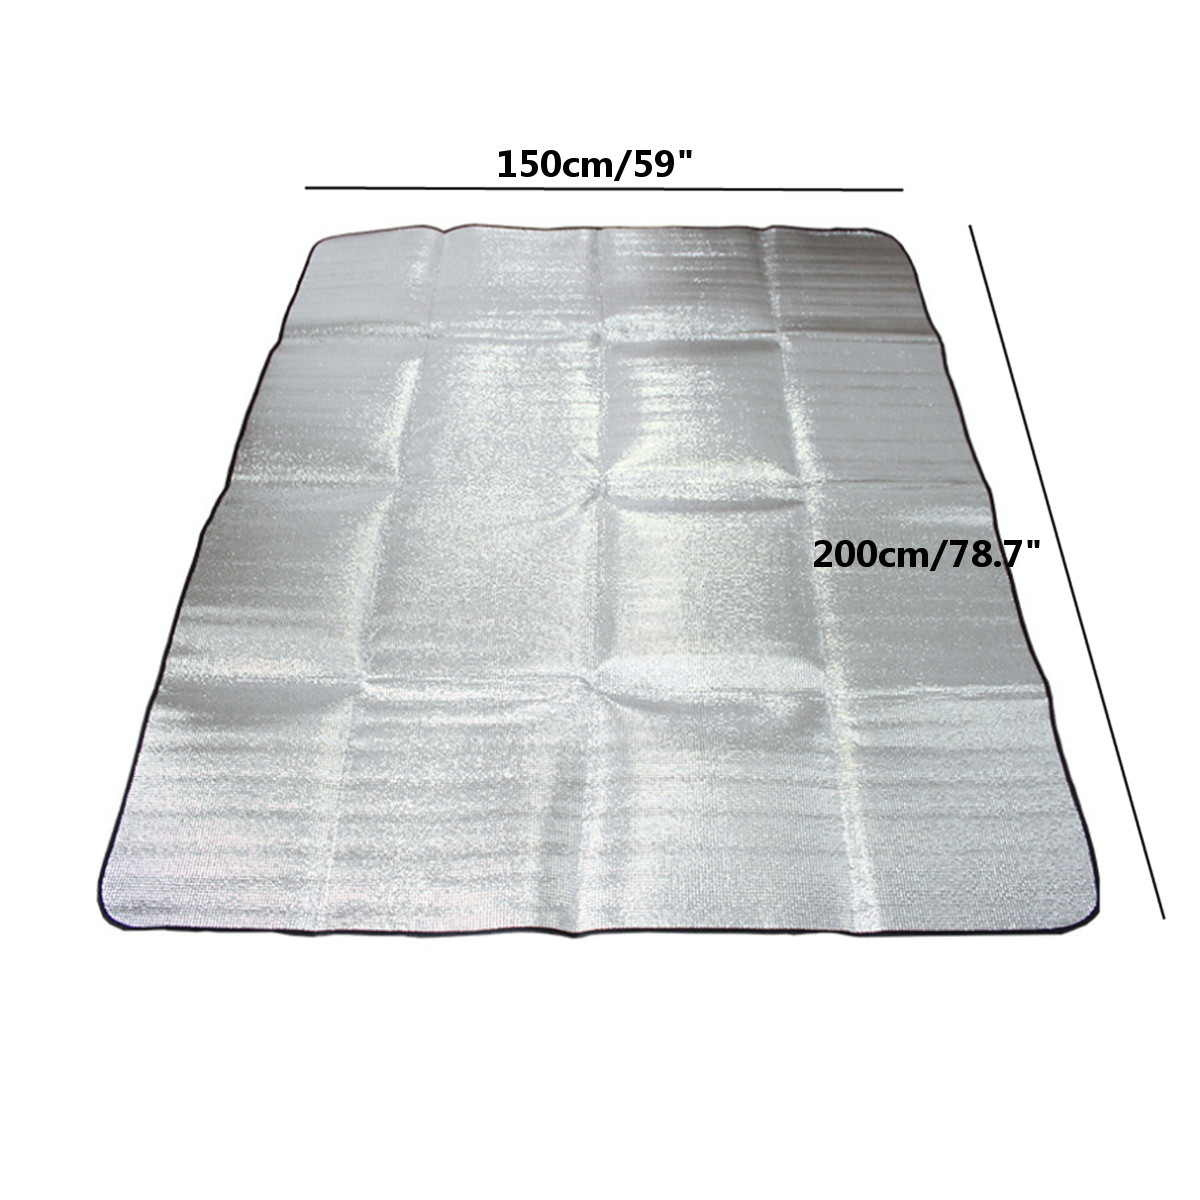 Double Side Picnic Pad Aluminum Foil Sleeping Mat Camping Waterproof  200*200cm 